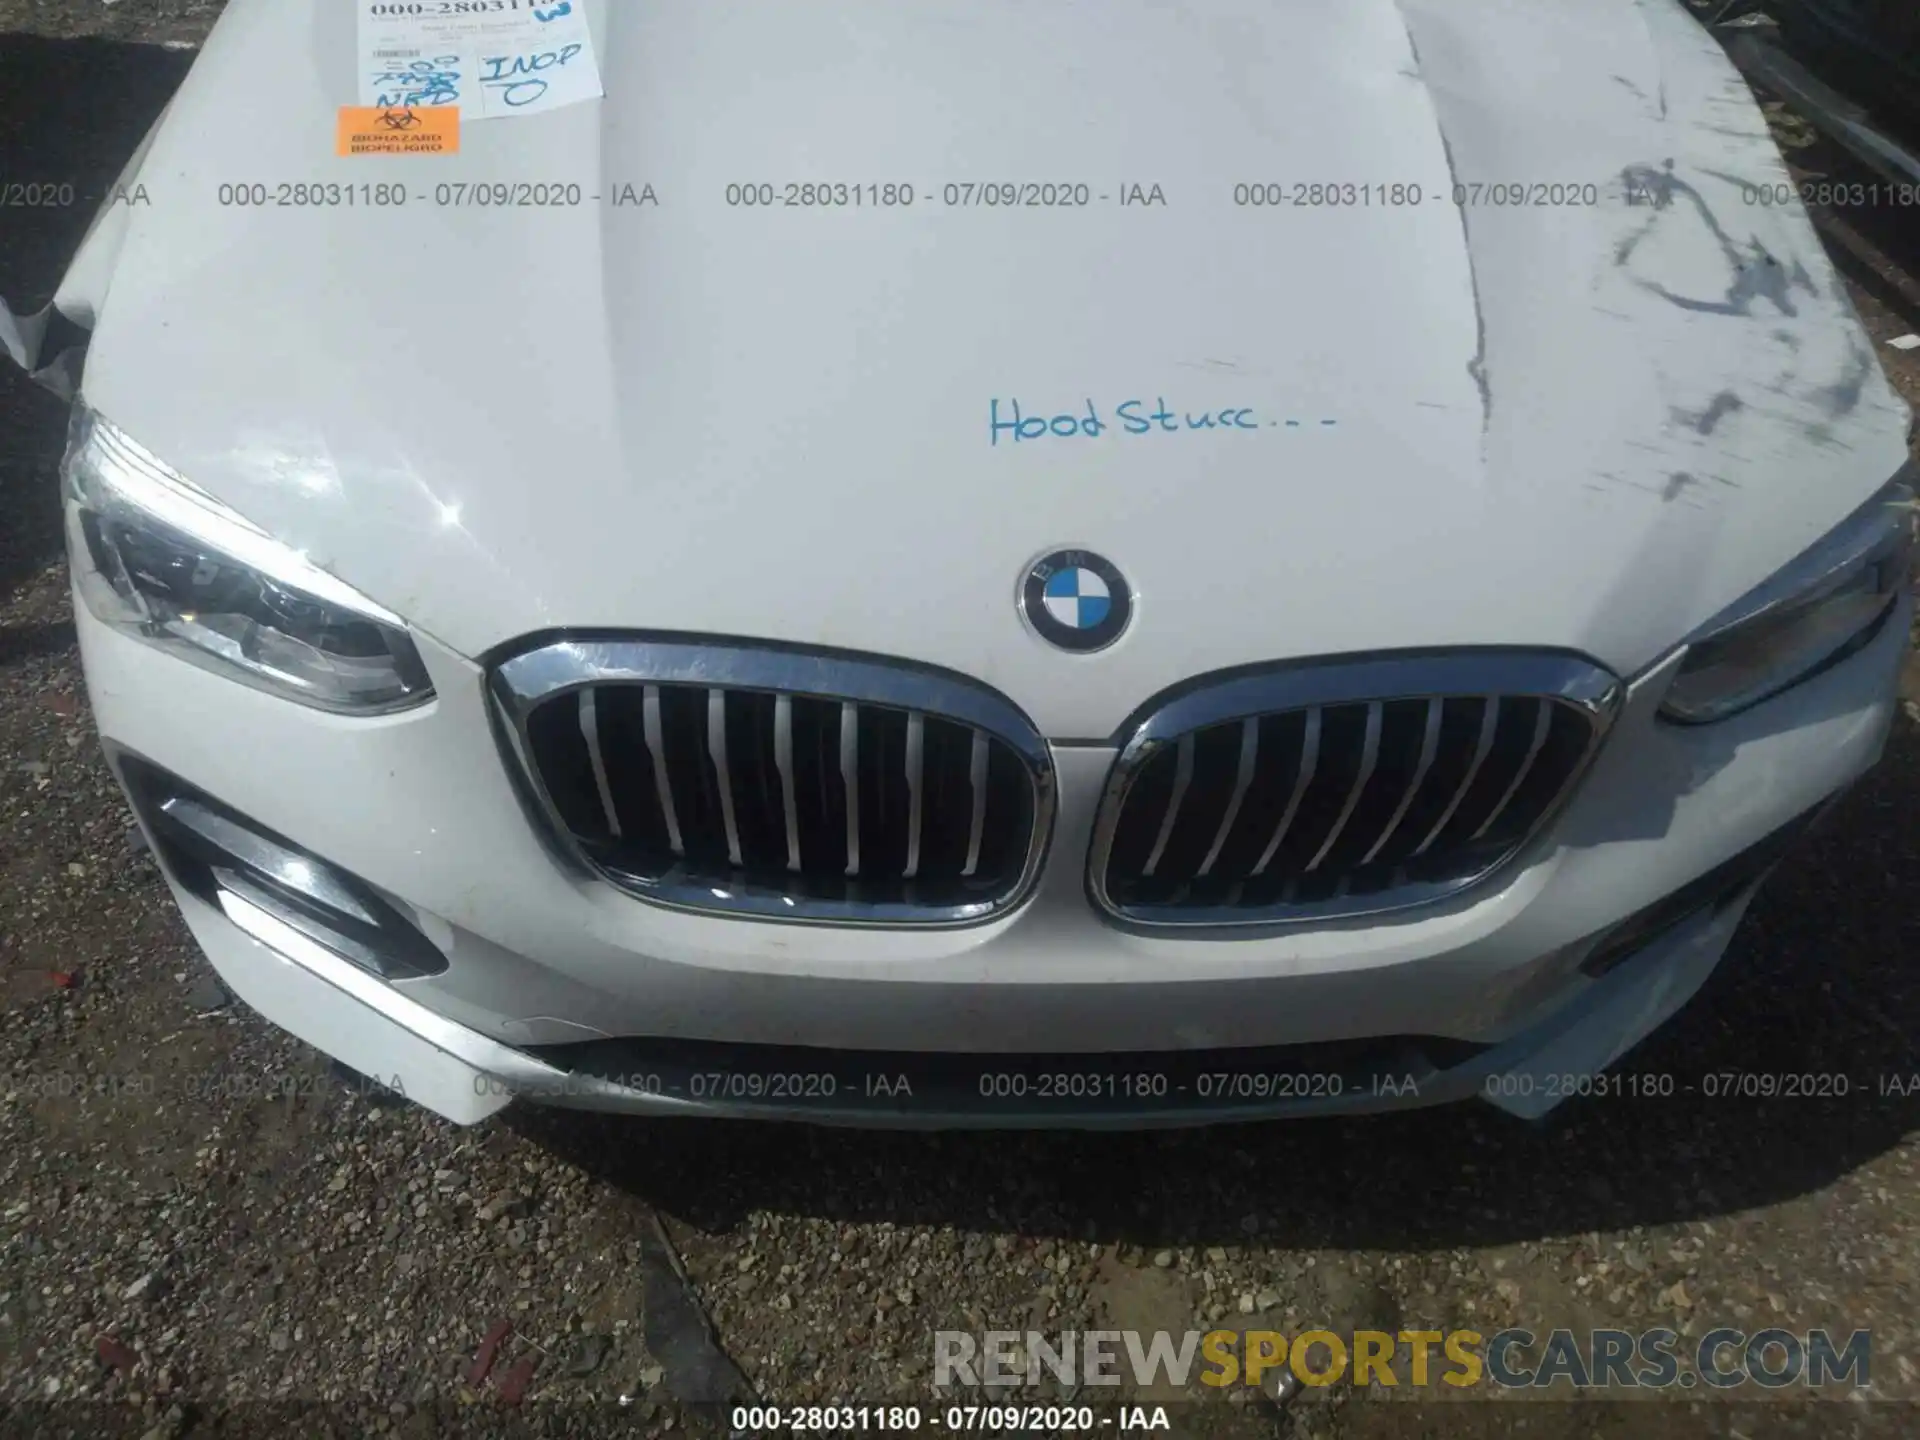 10 Photograph of a damaged car 5UX2V1C0XLLE67443 BMW X4 2020